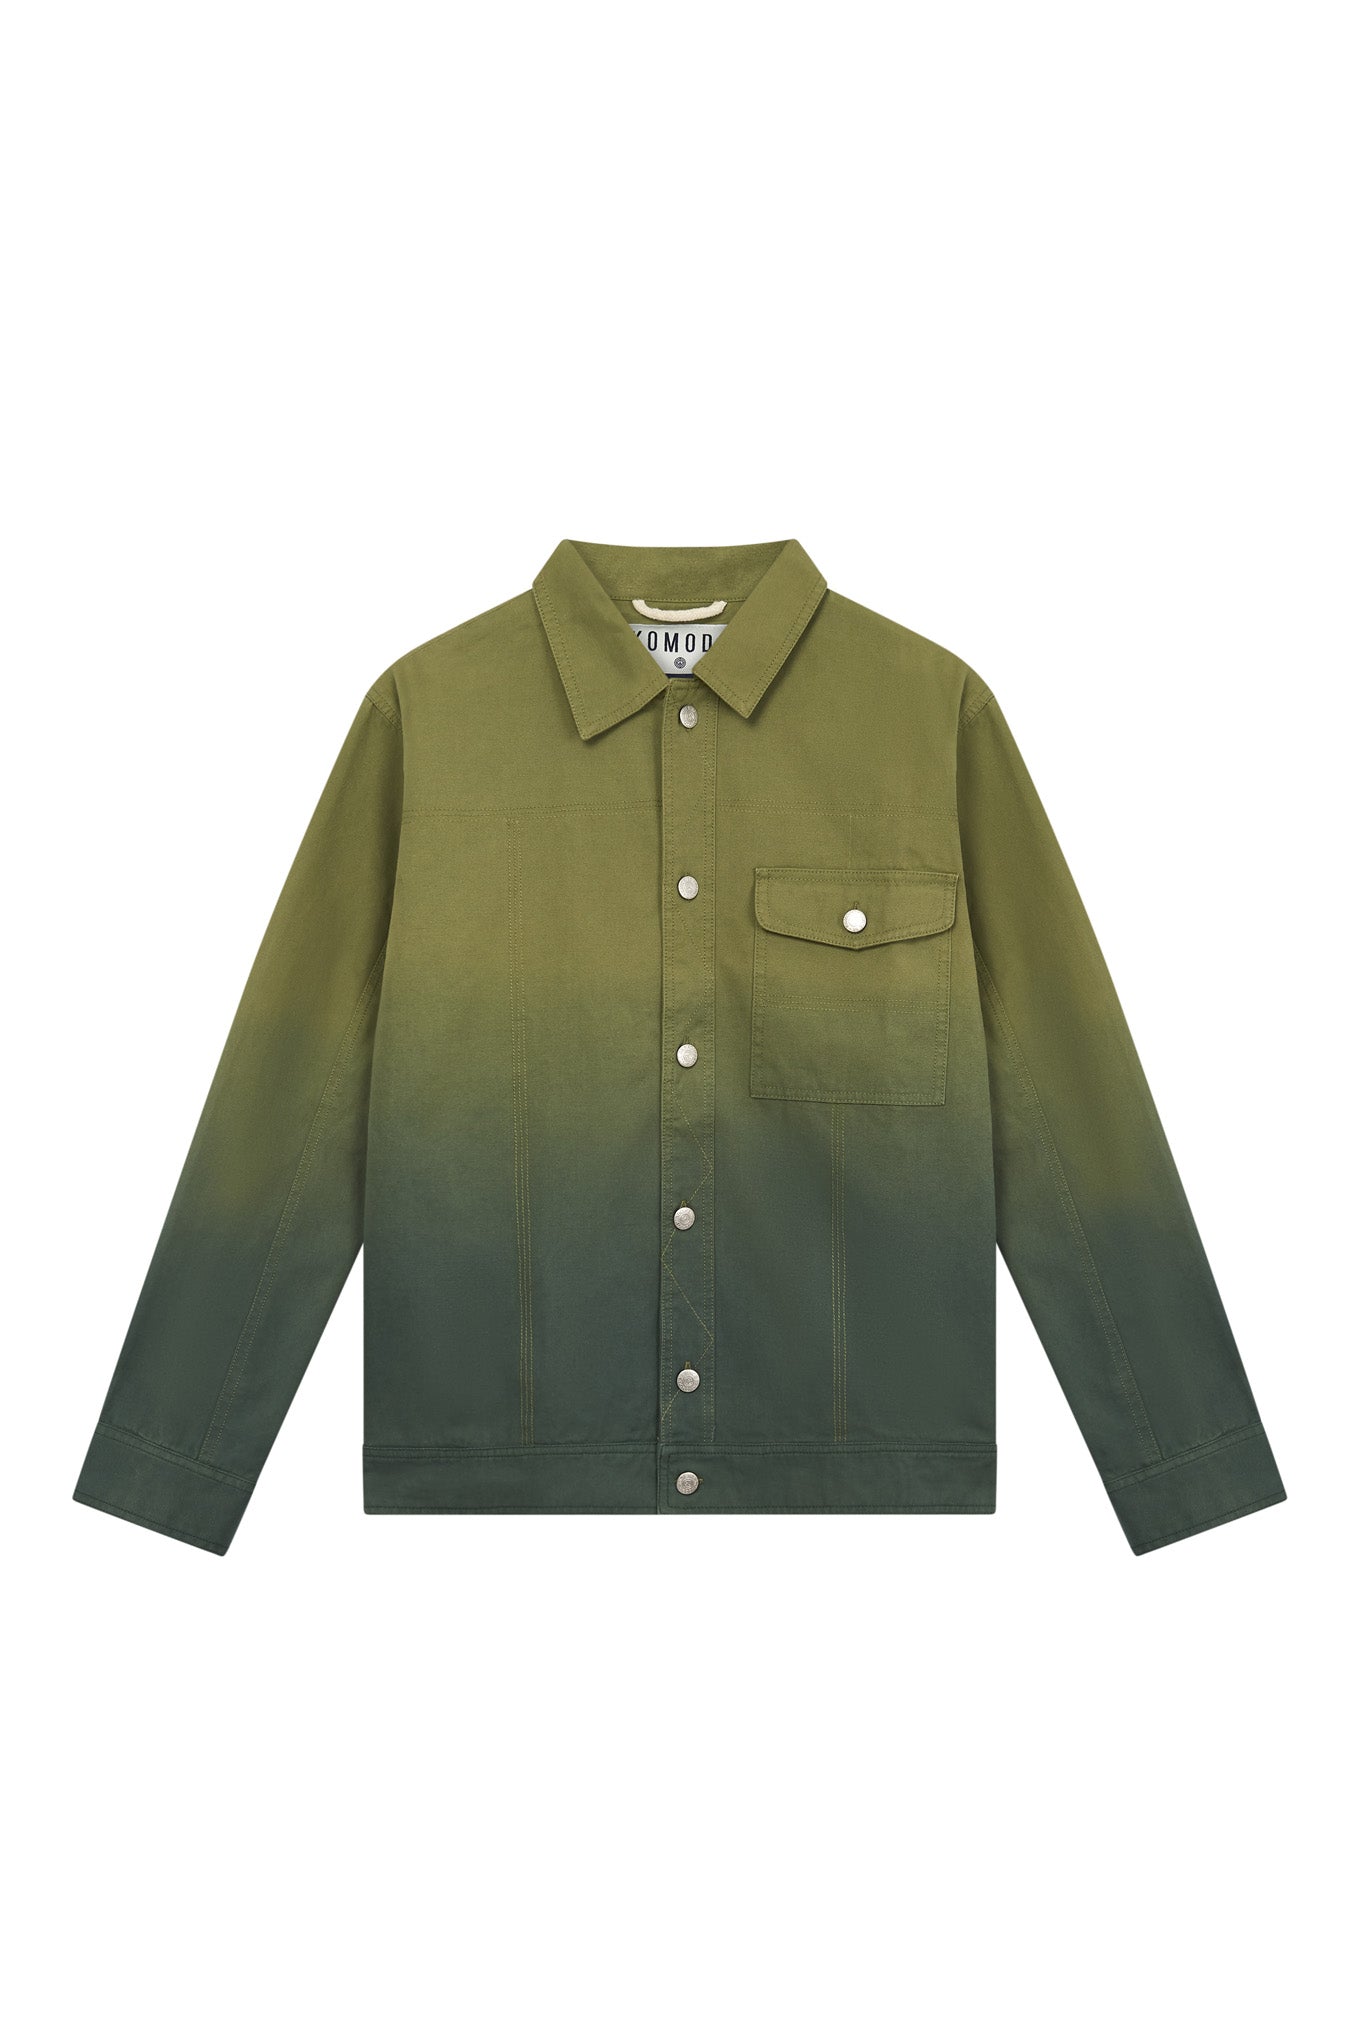 ORINO Dip Dyed Mens Jacket - Khaki Green